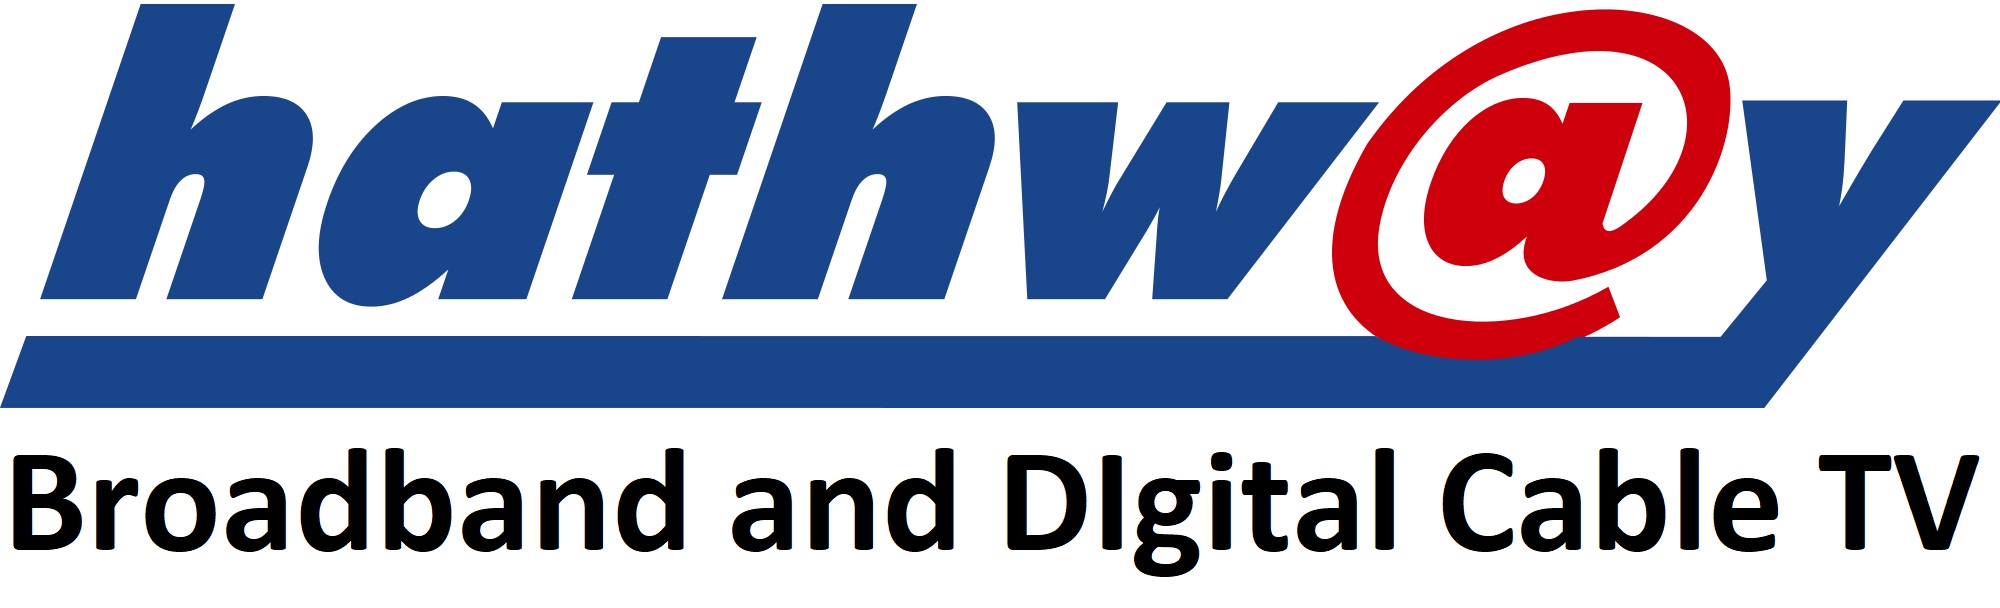 owner of Hathway Cable & Datacom Ltd Wiki logo